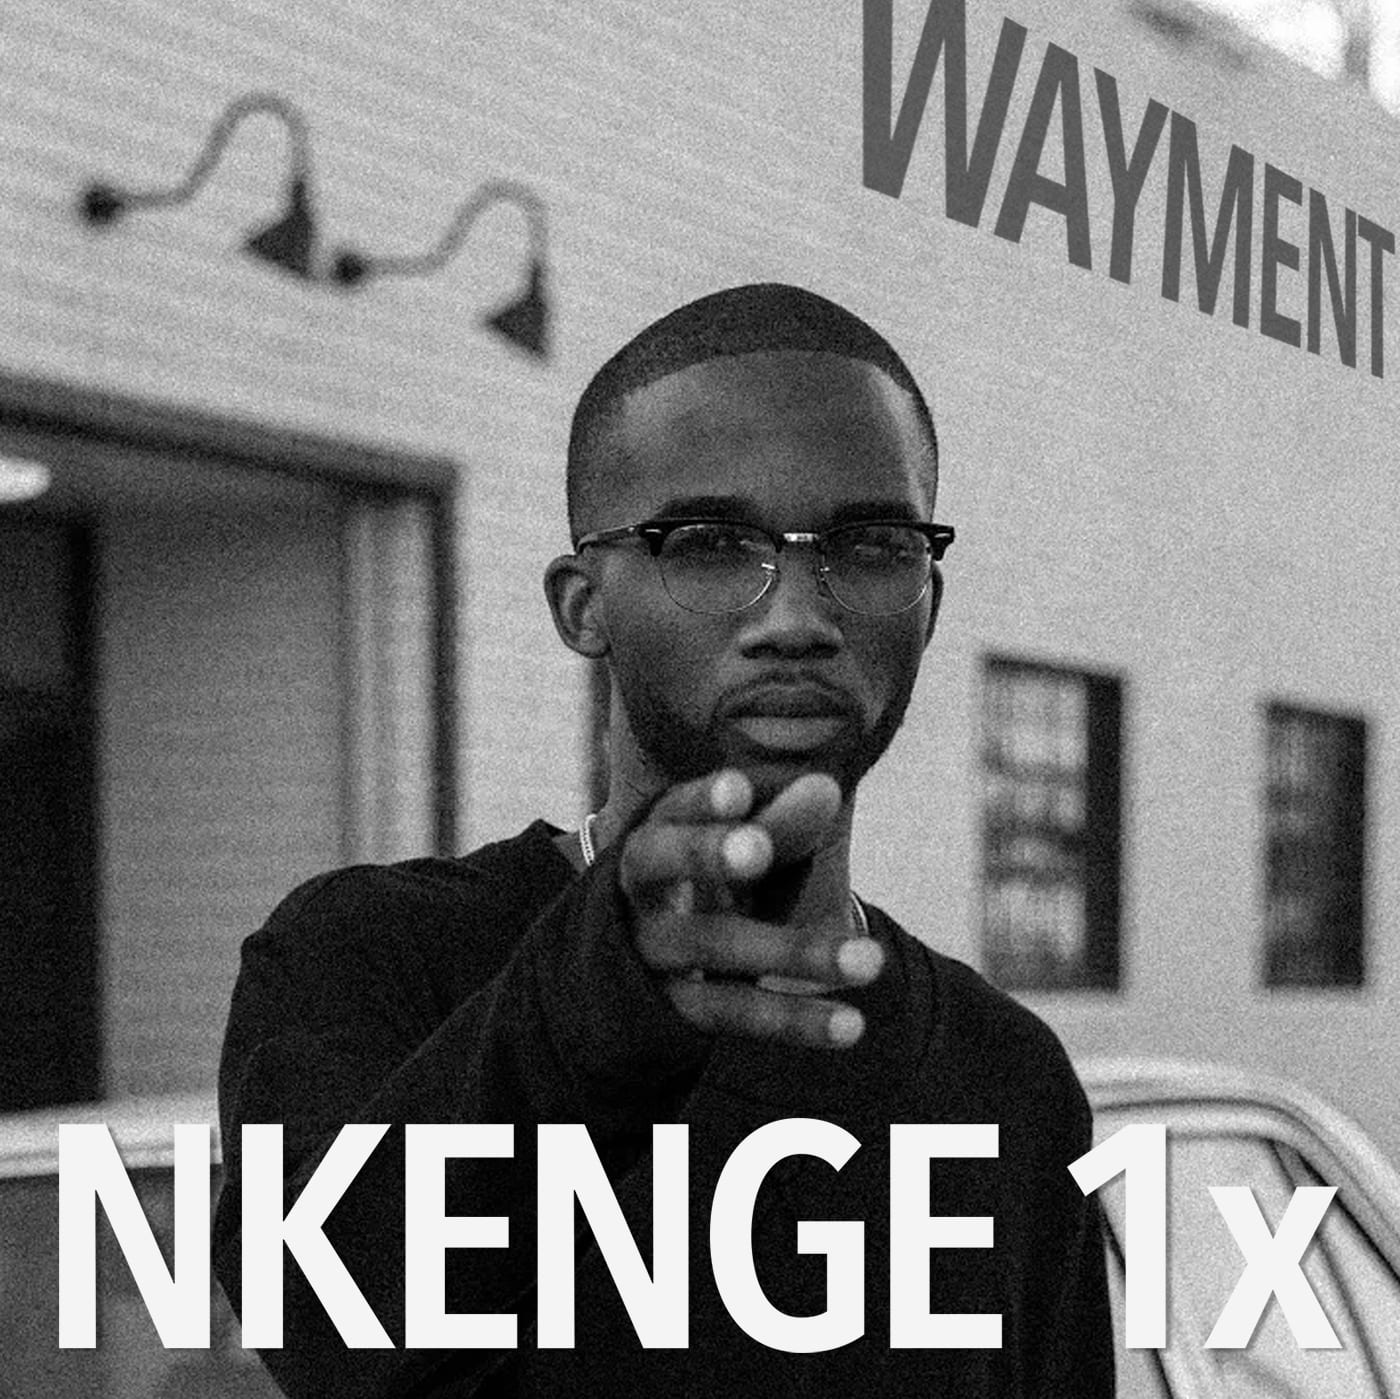 Nkenge 1x Drops New Single - "Wayment"